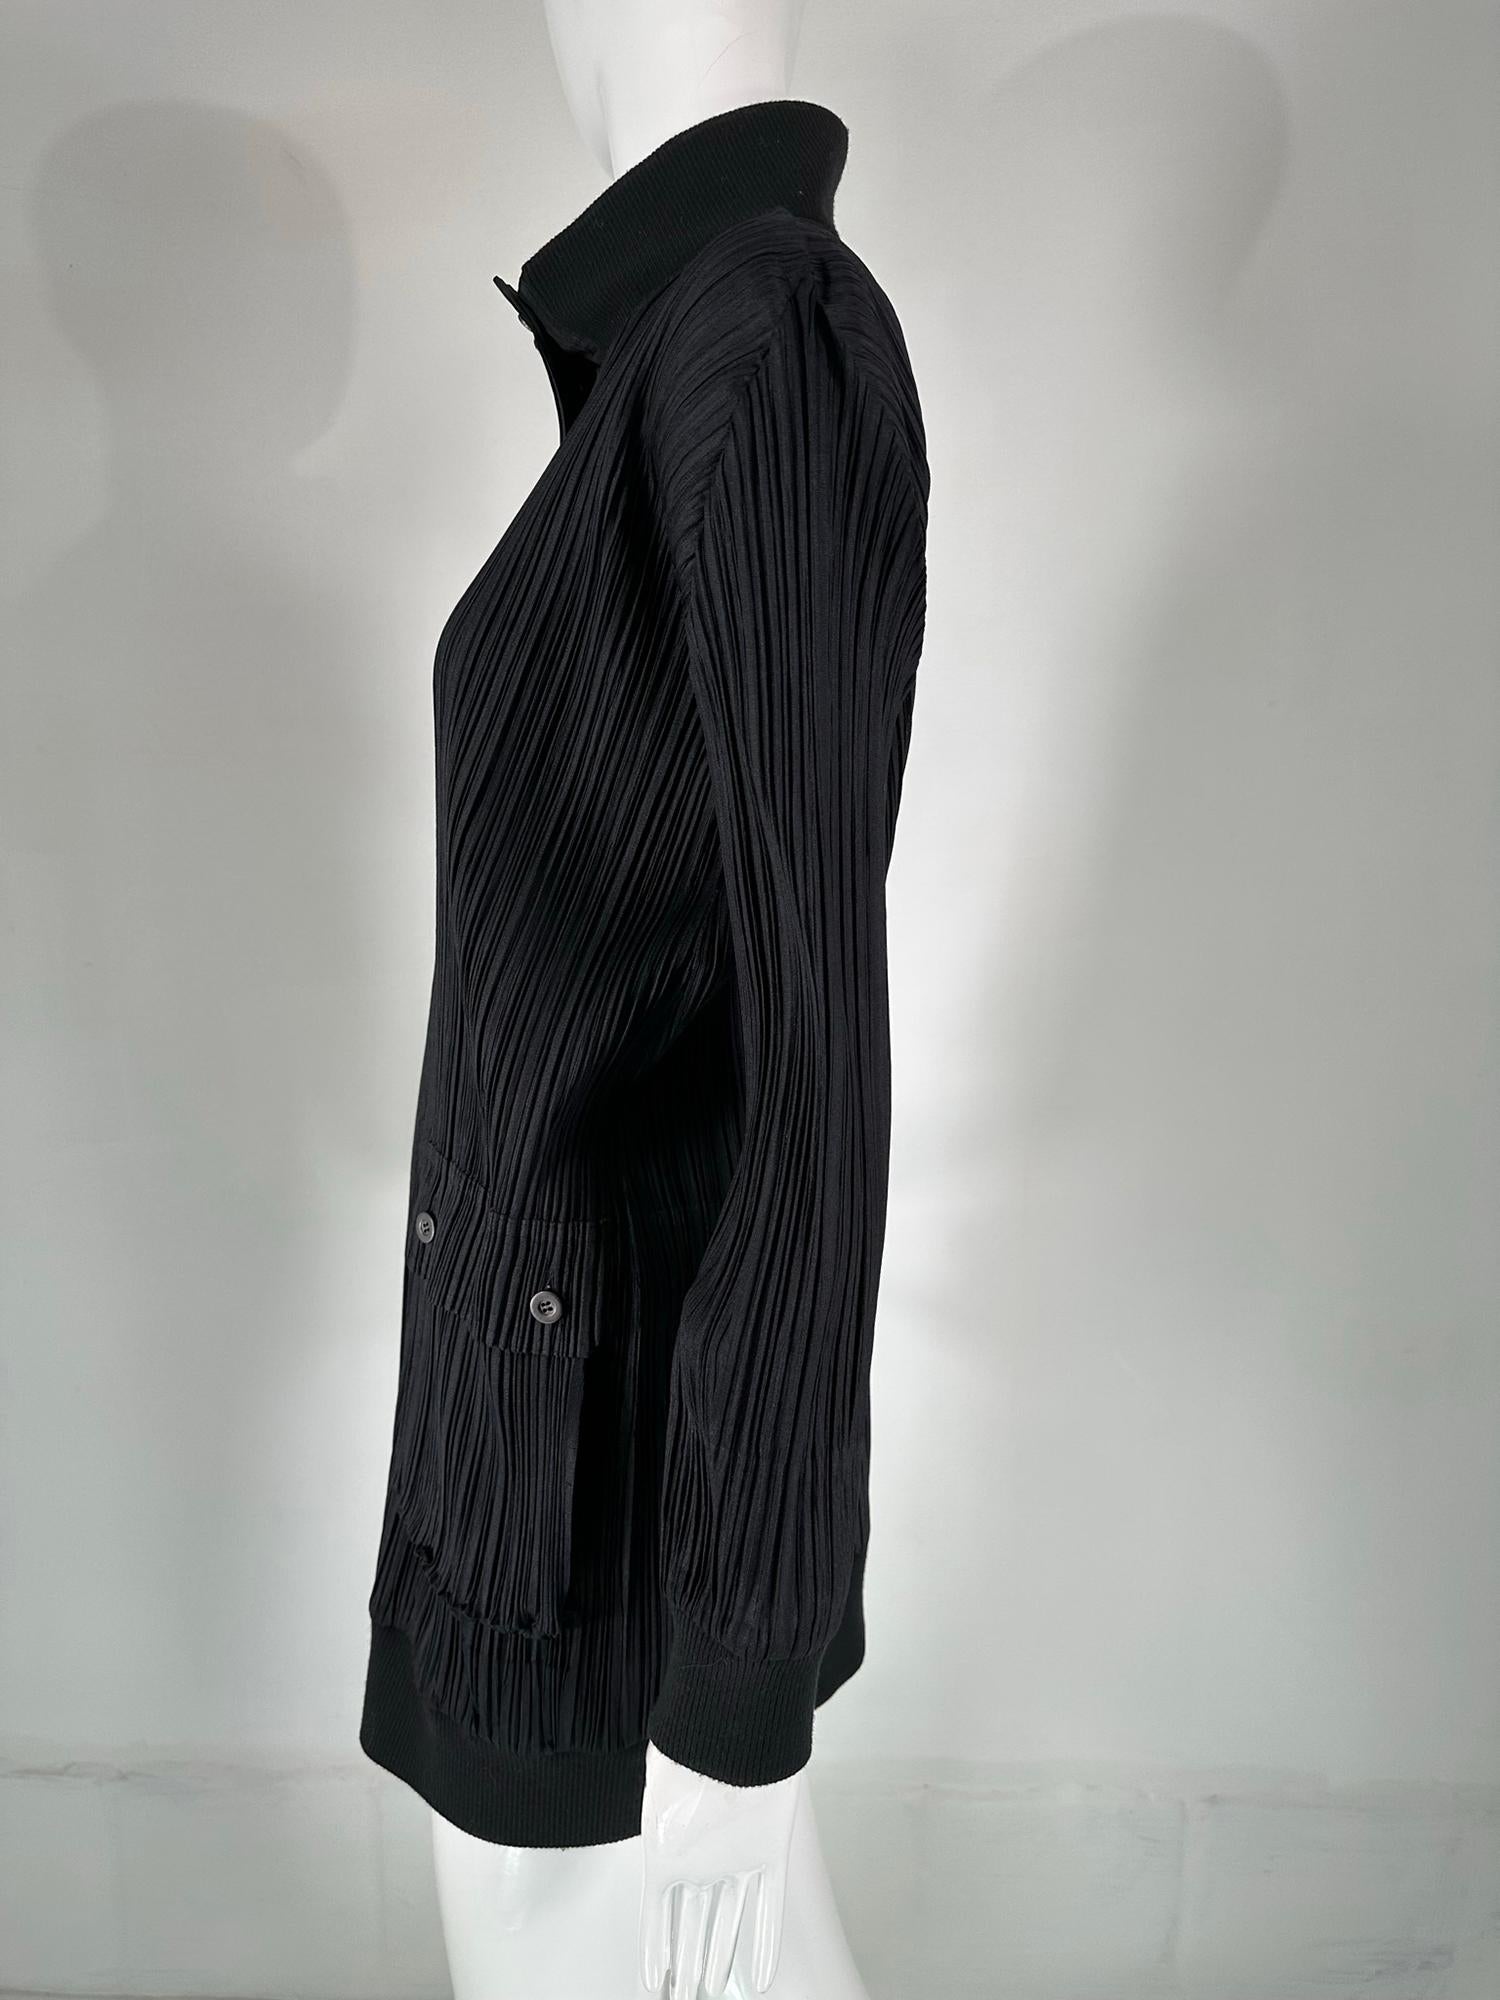 Issey Miyake Pleats Please Black Funnel Neck Hidden Zipper Front Long Jacket 3 For Sale 1